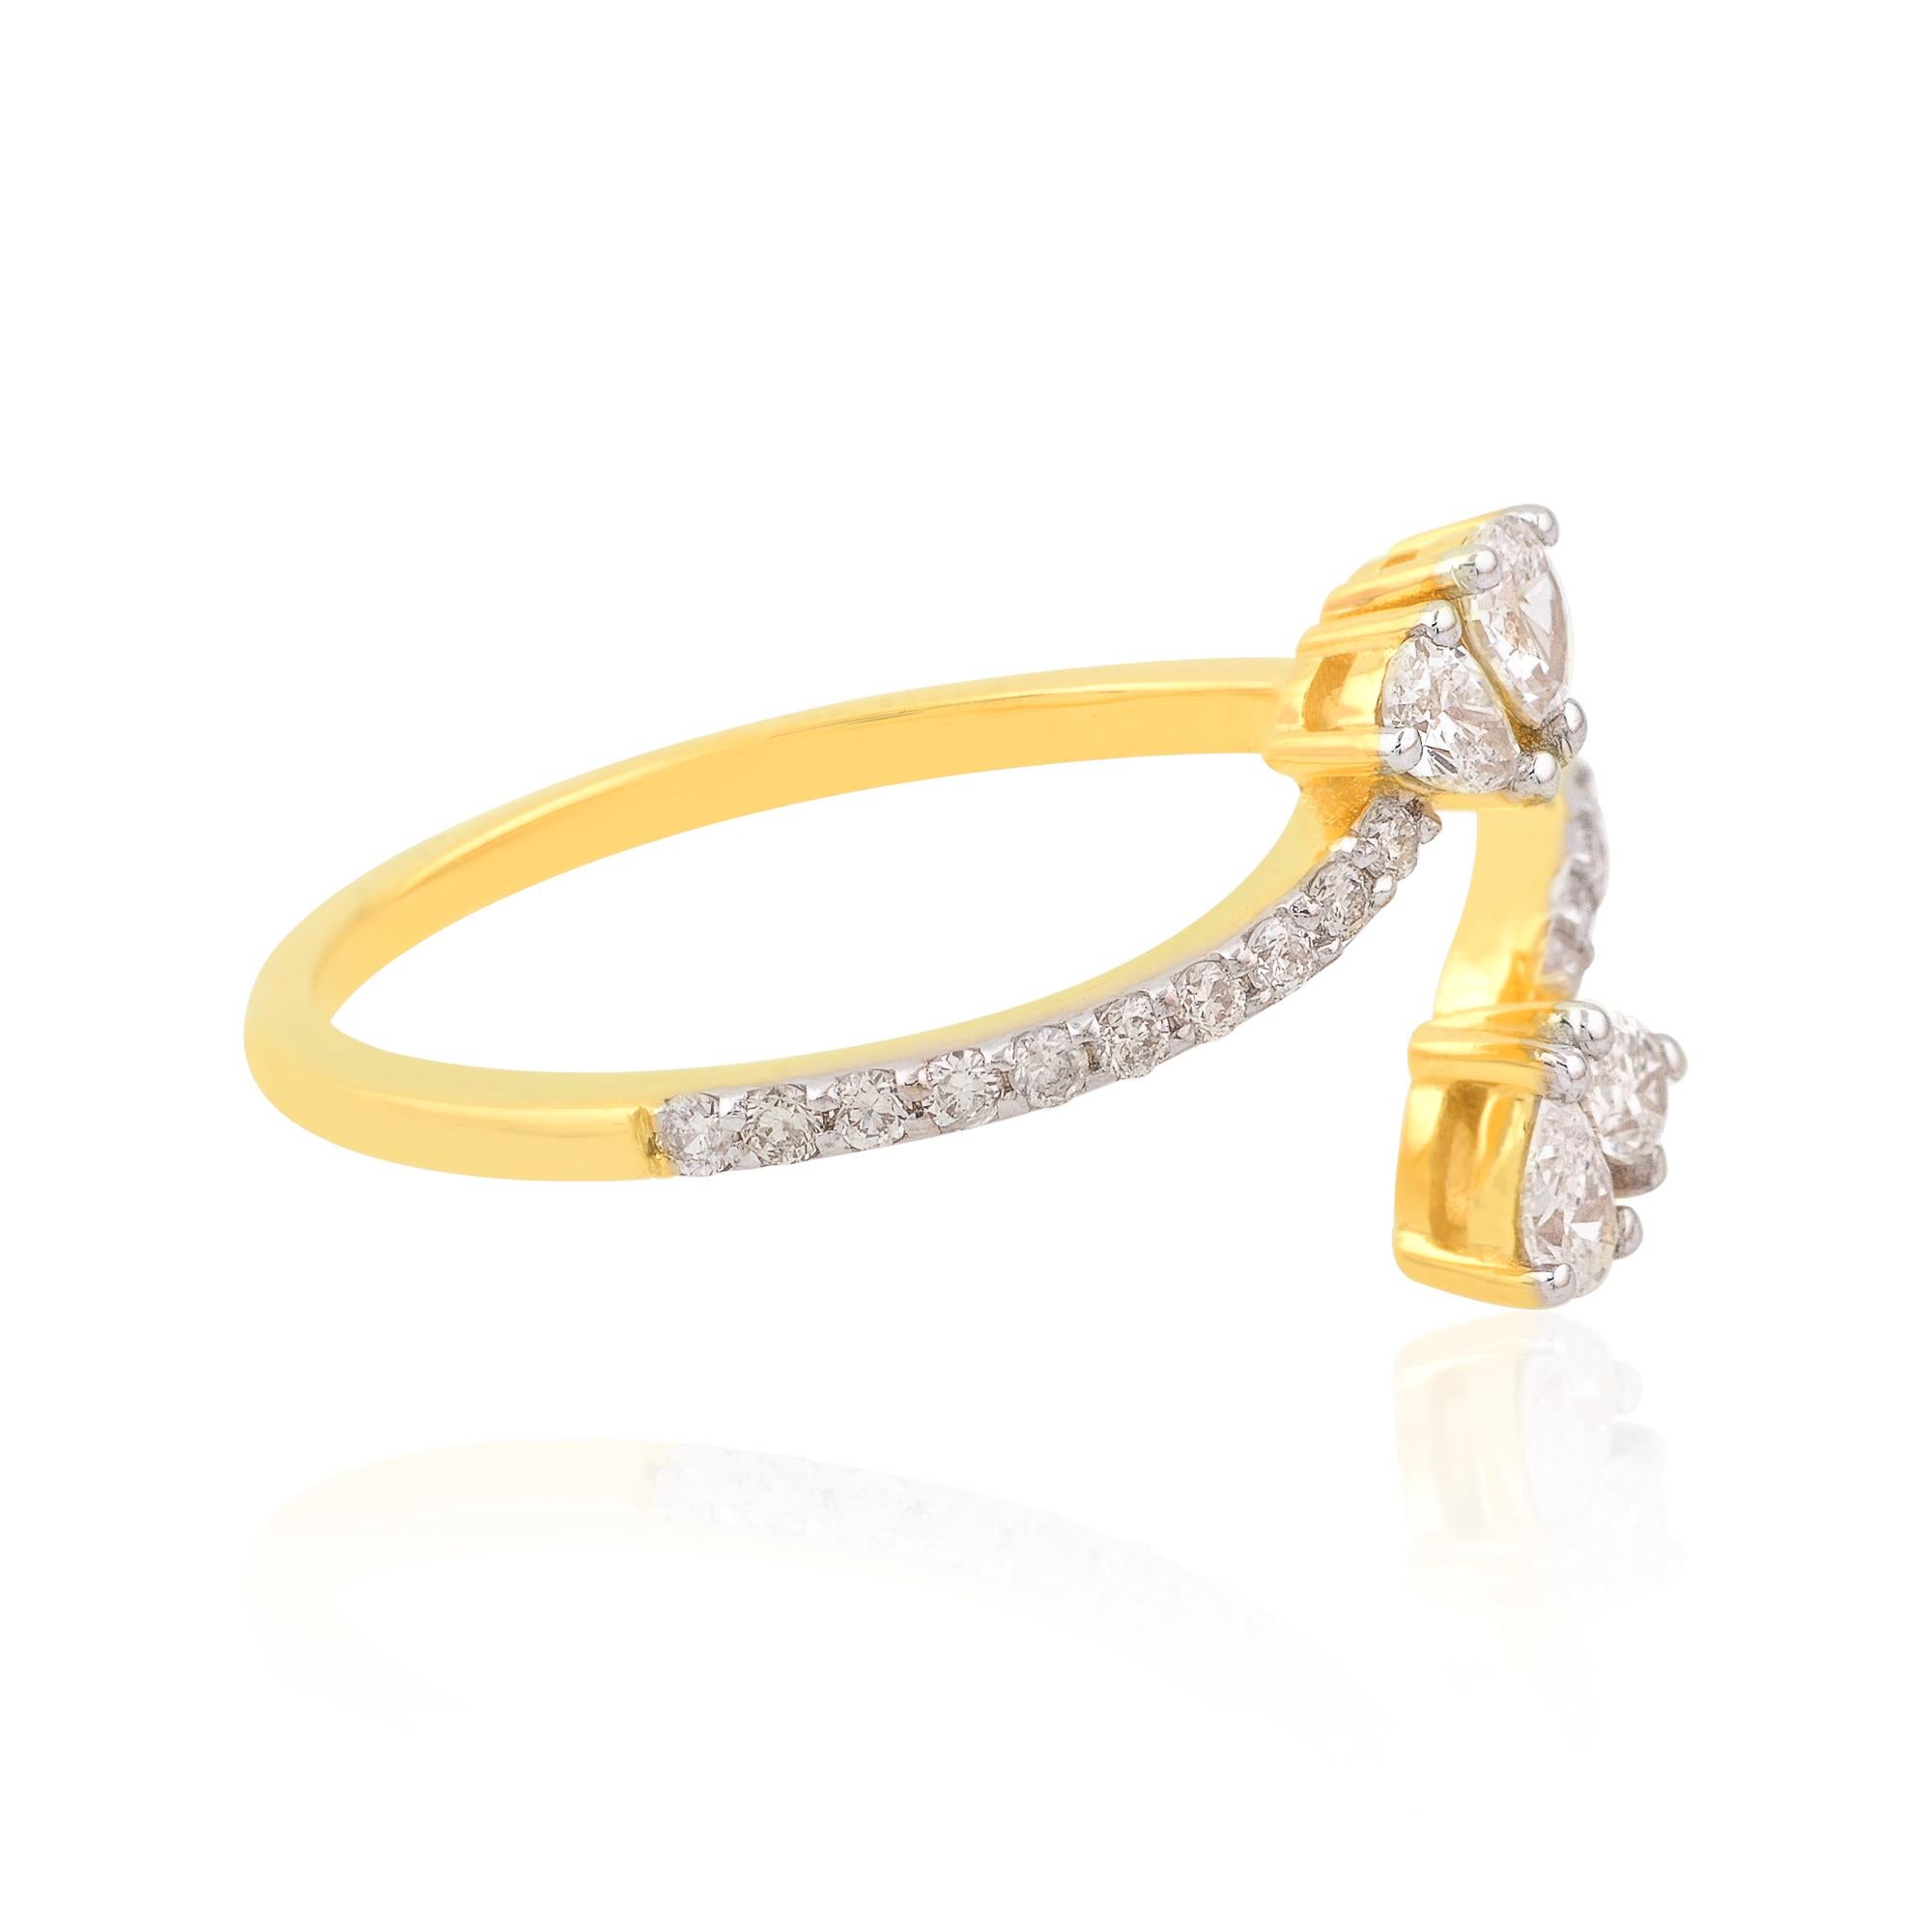 For Sale:  SI Clarity HI Color Diamond Wrap Ring 18 Karat Yellow Gold Handmade Fine Jewelry 2